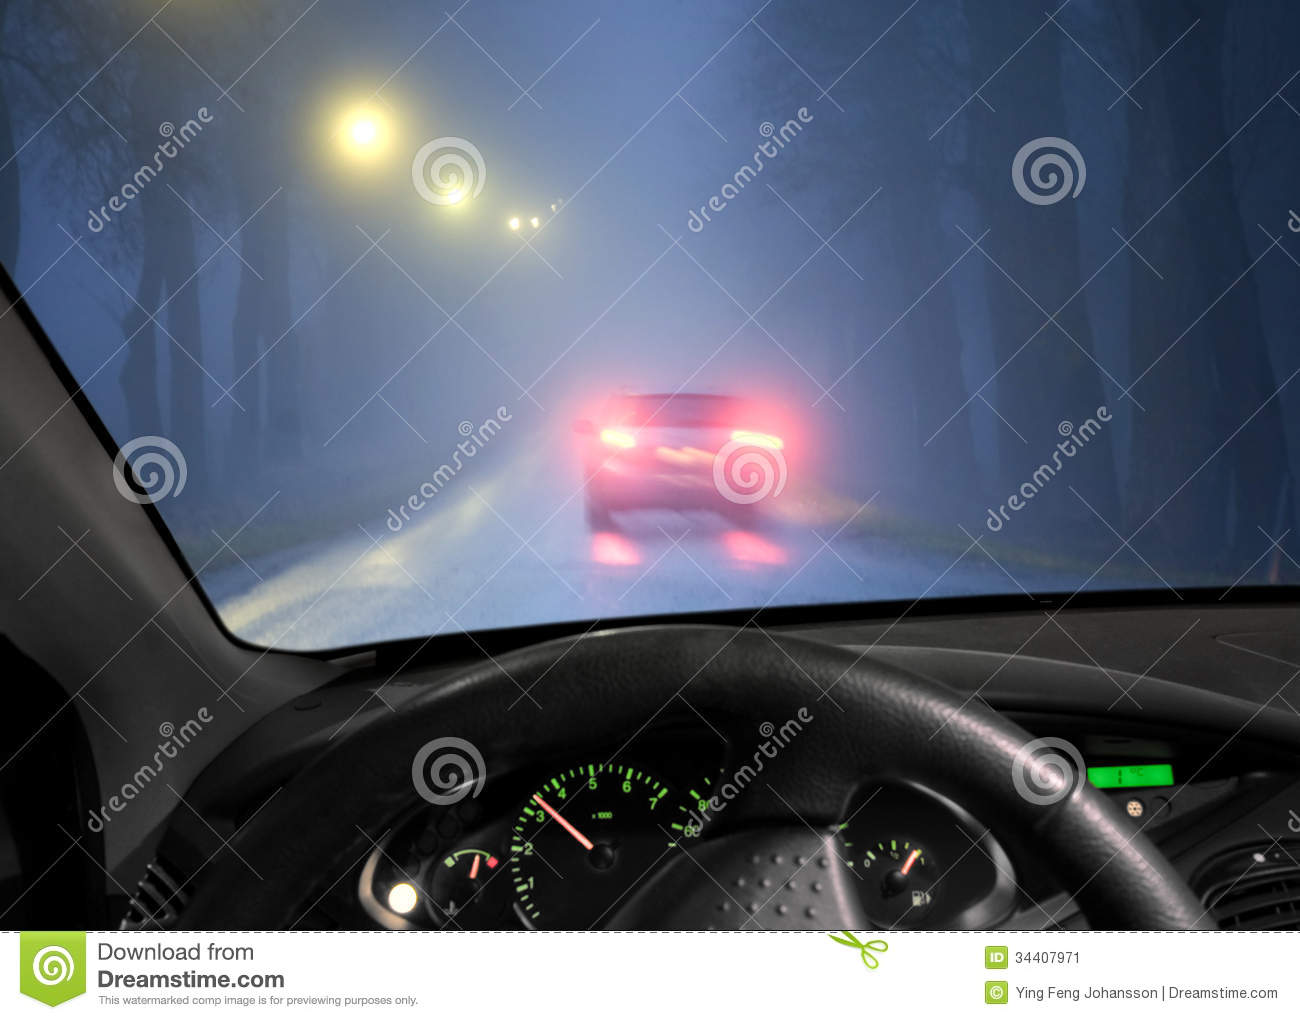 Car Driving In A Dark Avenue In Thick Fog Seen Through Windscreen Of